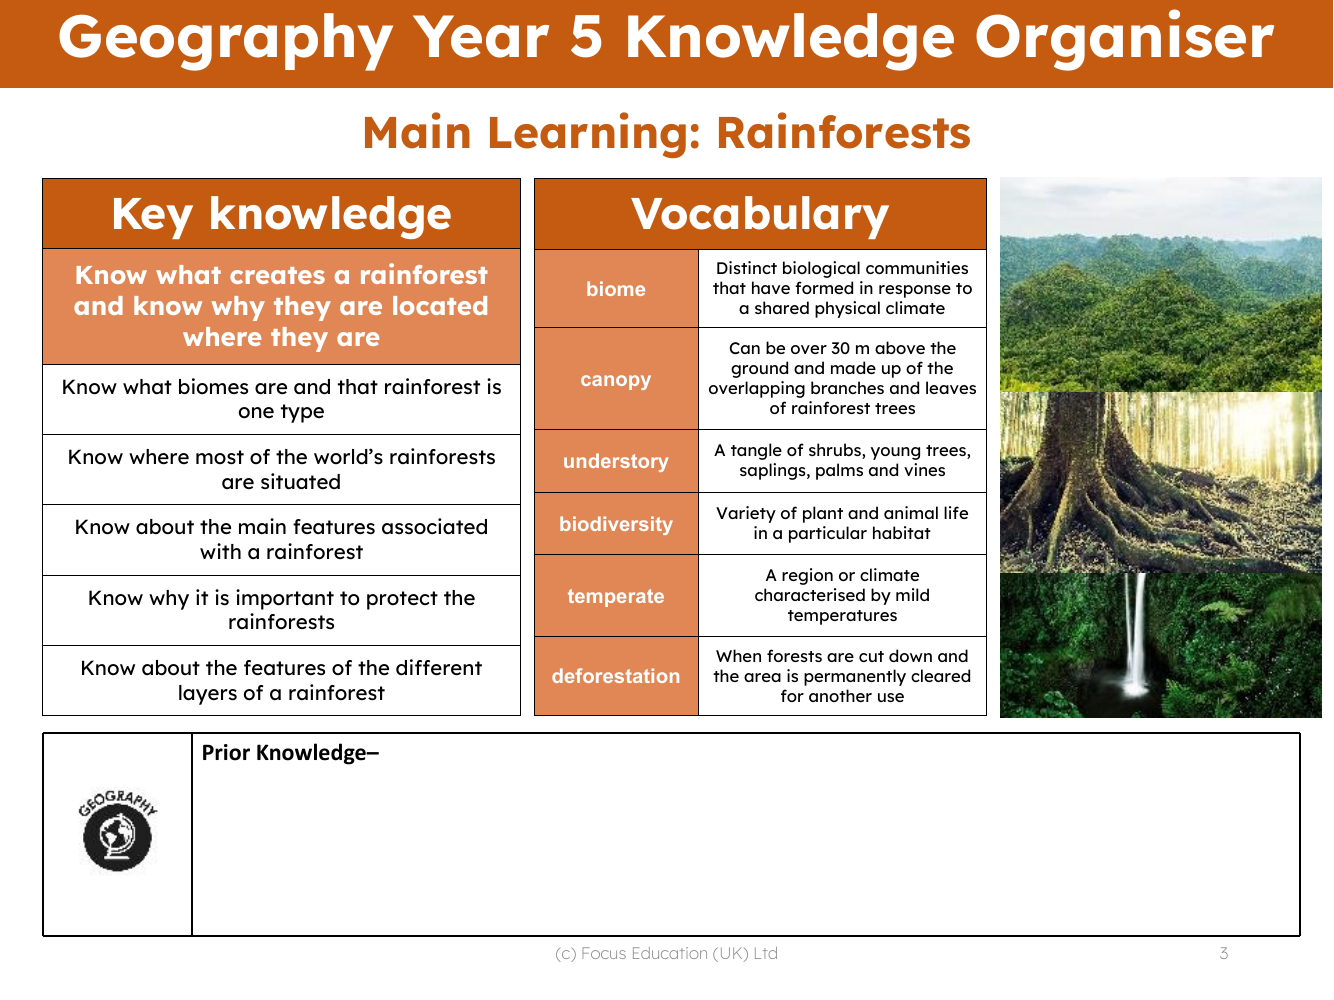 Knowledge organiser - Rainforests - Year 5